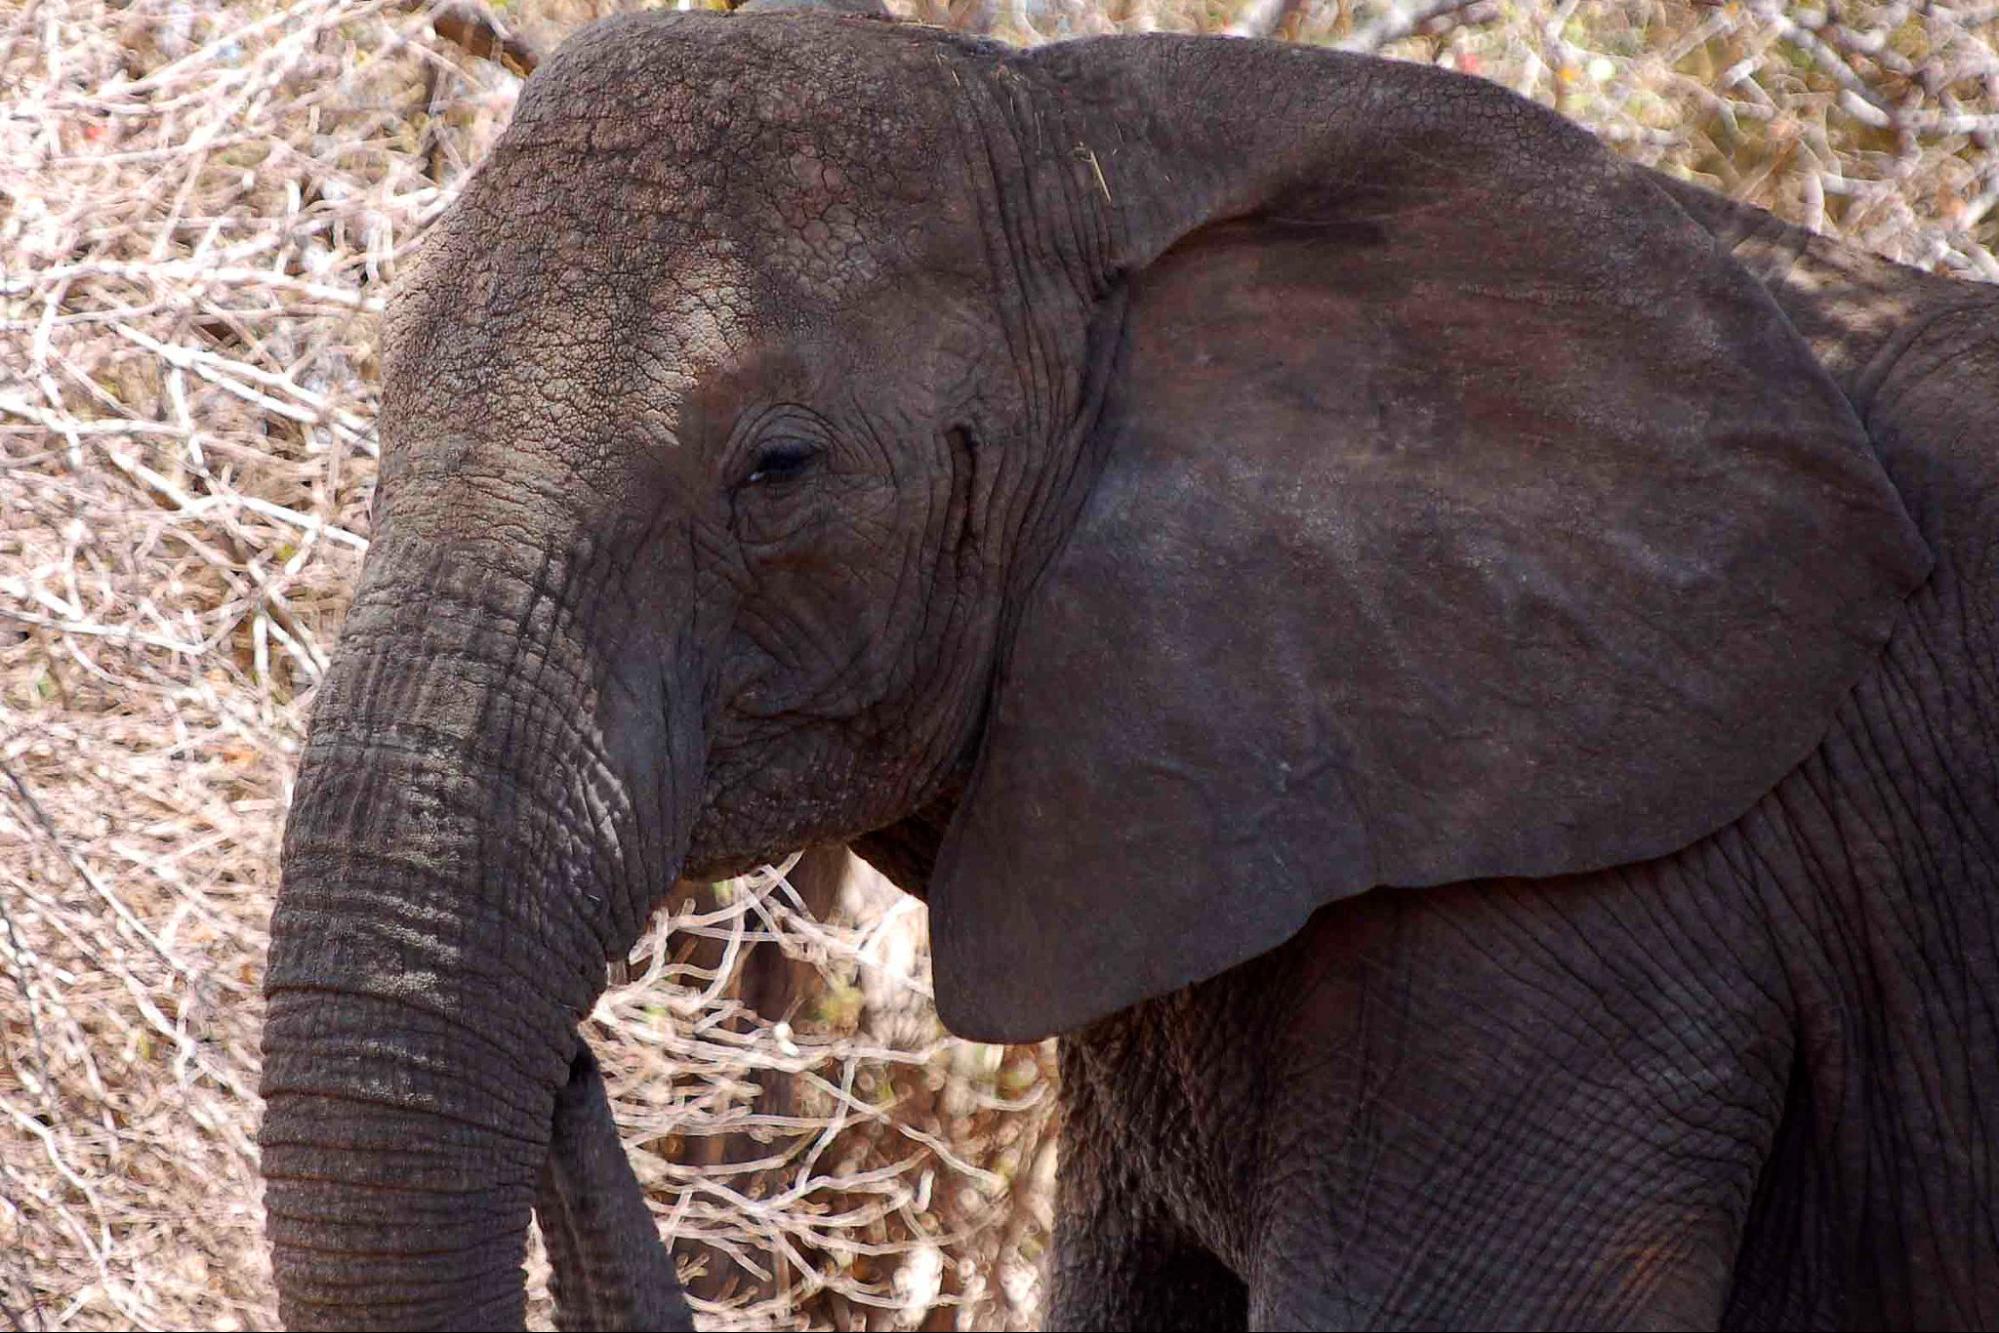 Ivory Trade Accelerated Evolution of Tuskless Elephants: Study